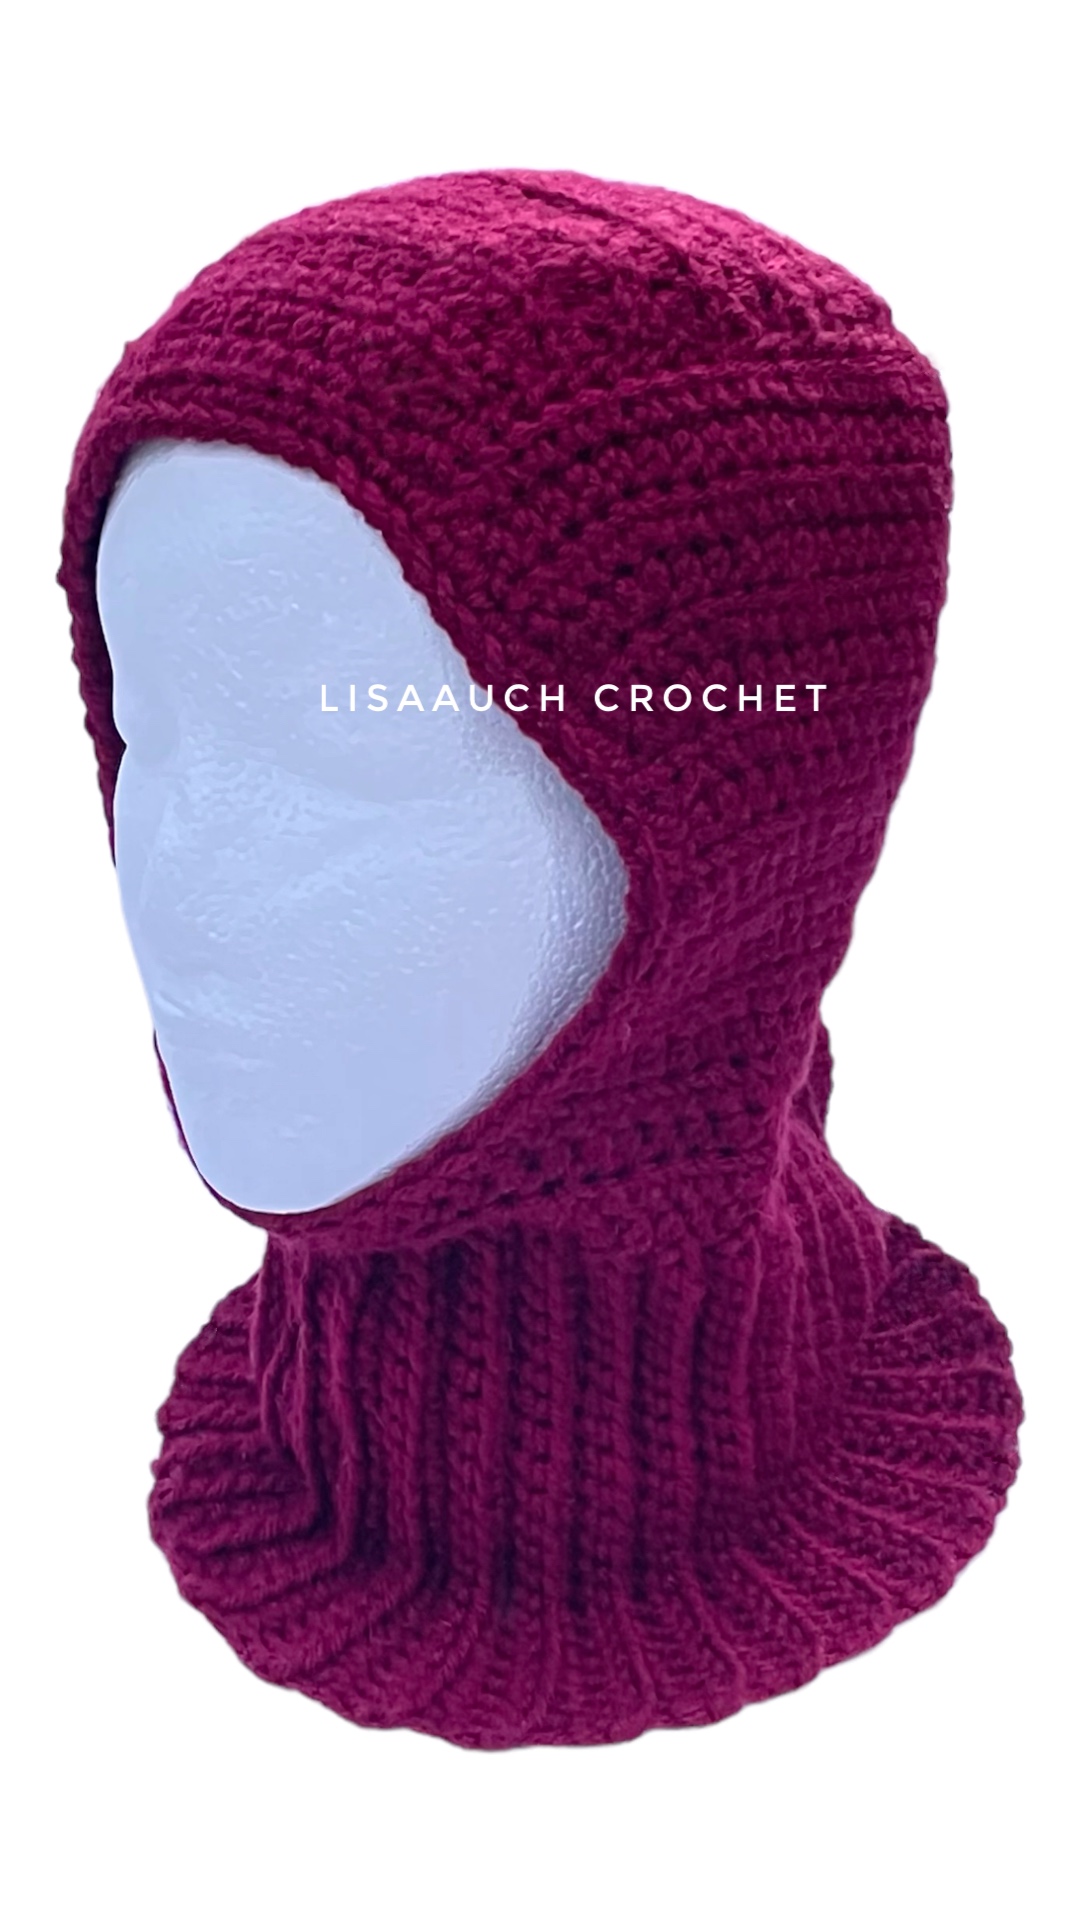 Rose Crochet Balaclava: Crochet pattern